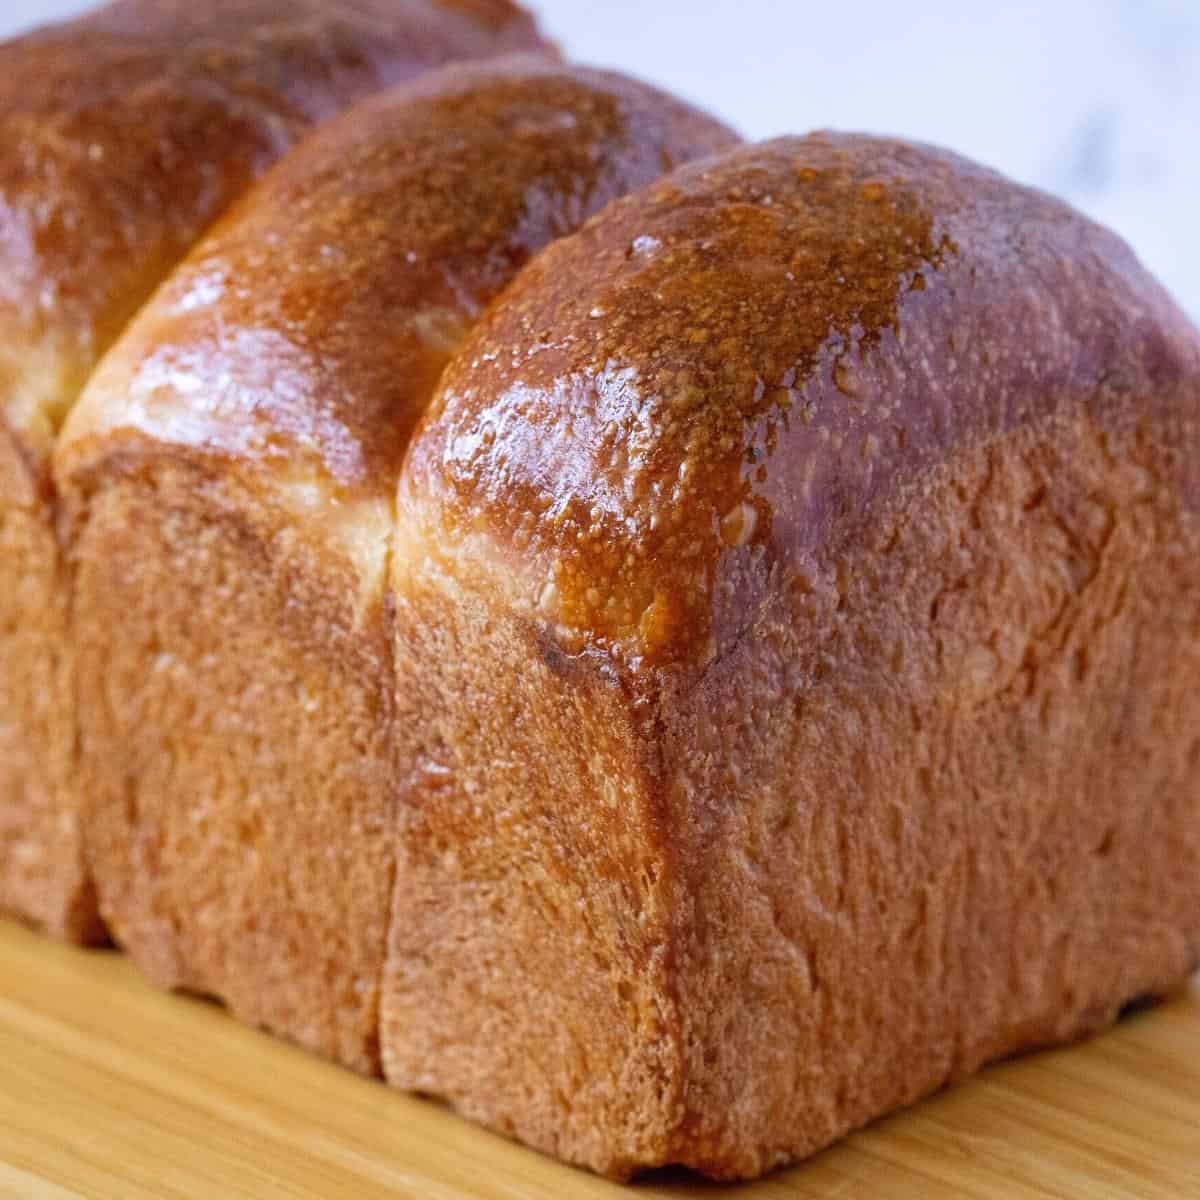 A sourdough bread on the table.